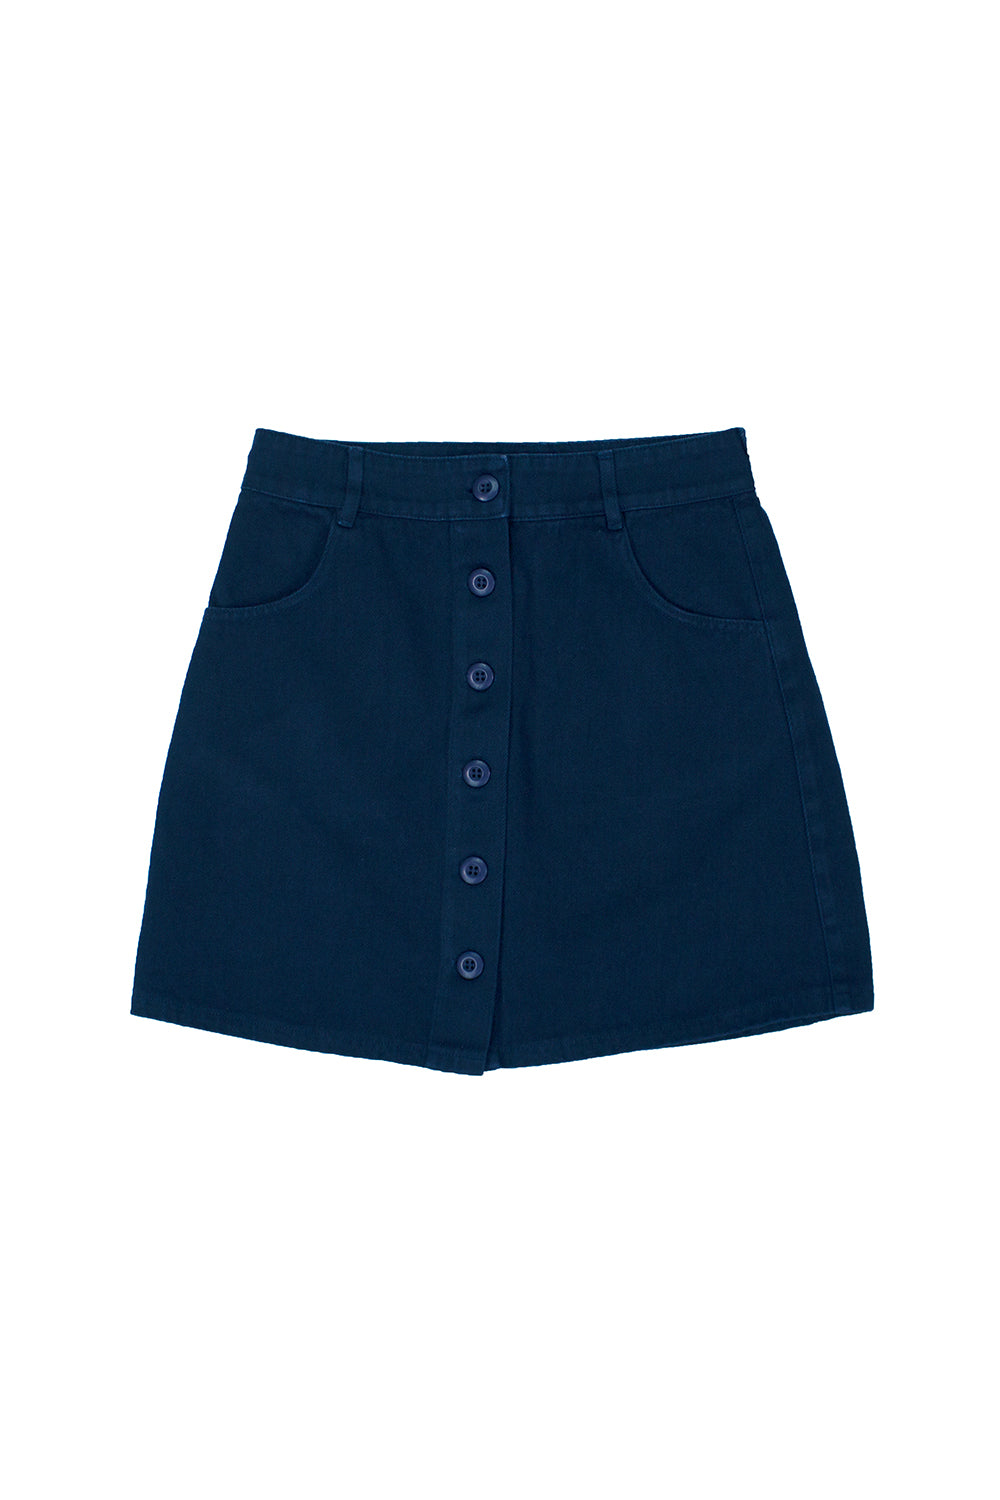 Vassar Skirt | Jungmaven Hemp Clothing & Accessories / Color: Navy